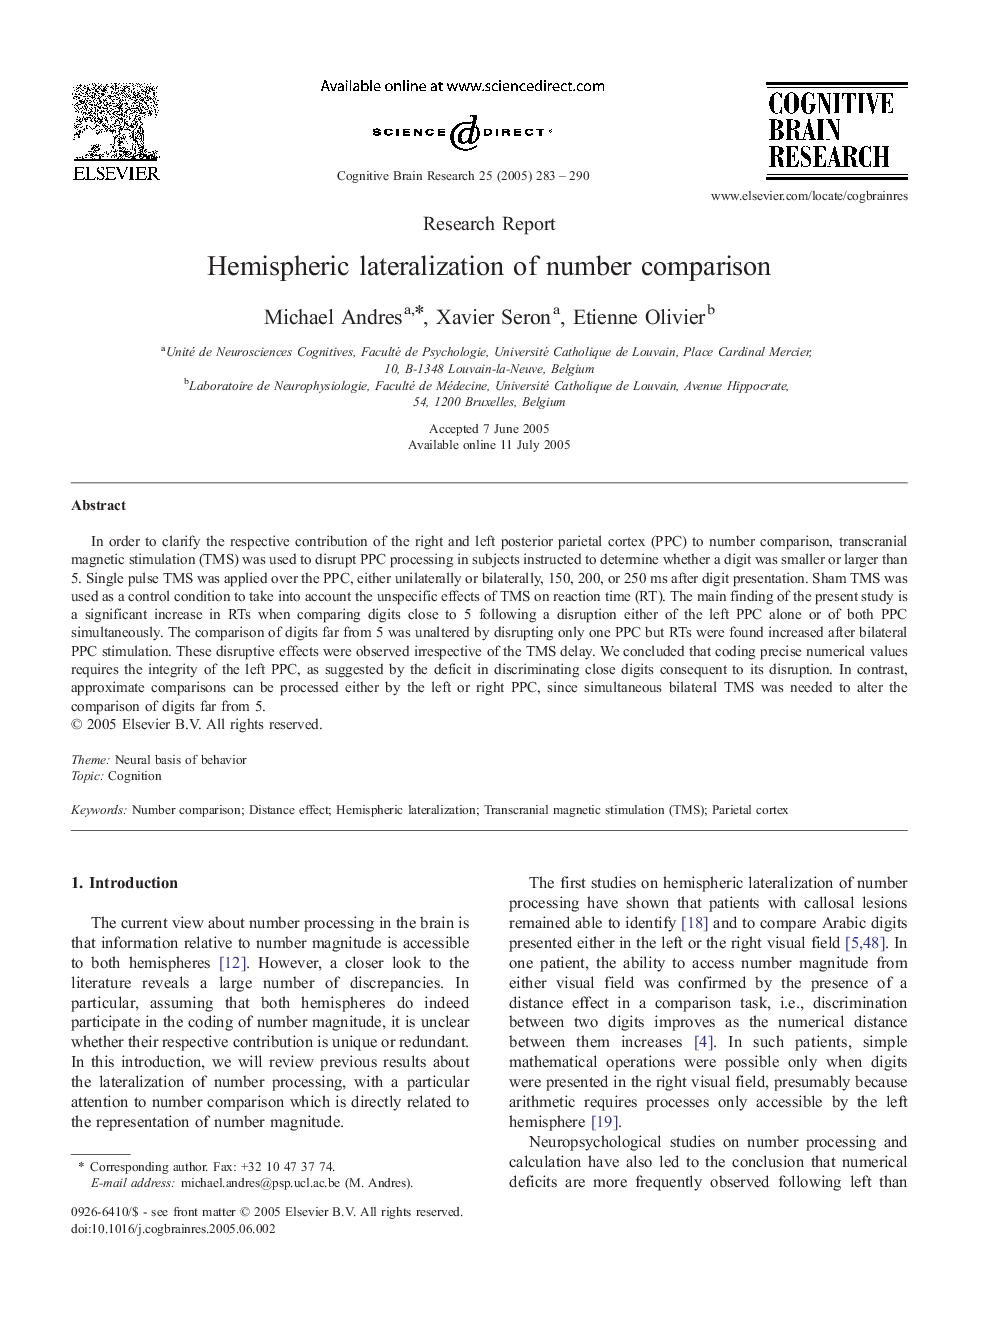 Hemispheric lateralization of number comparison